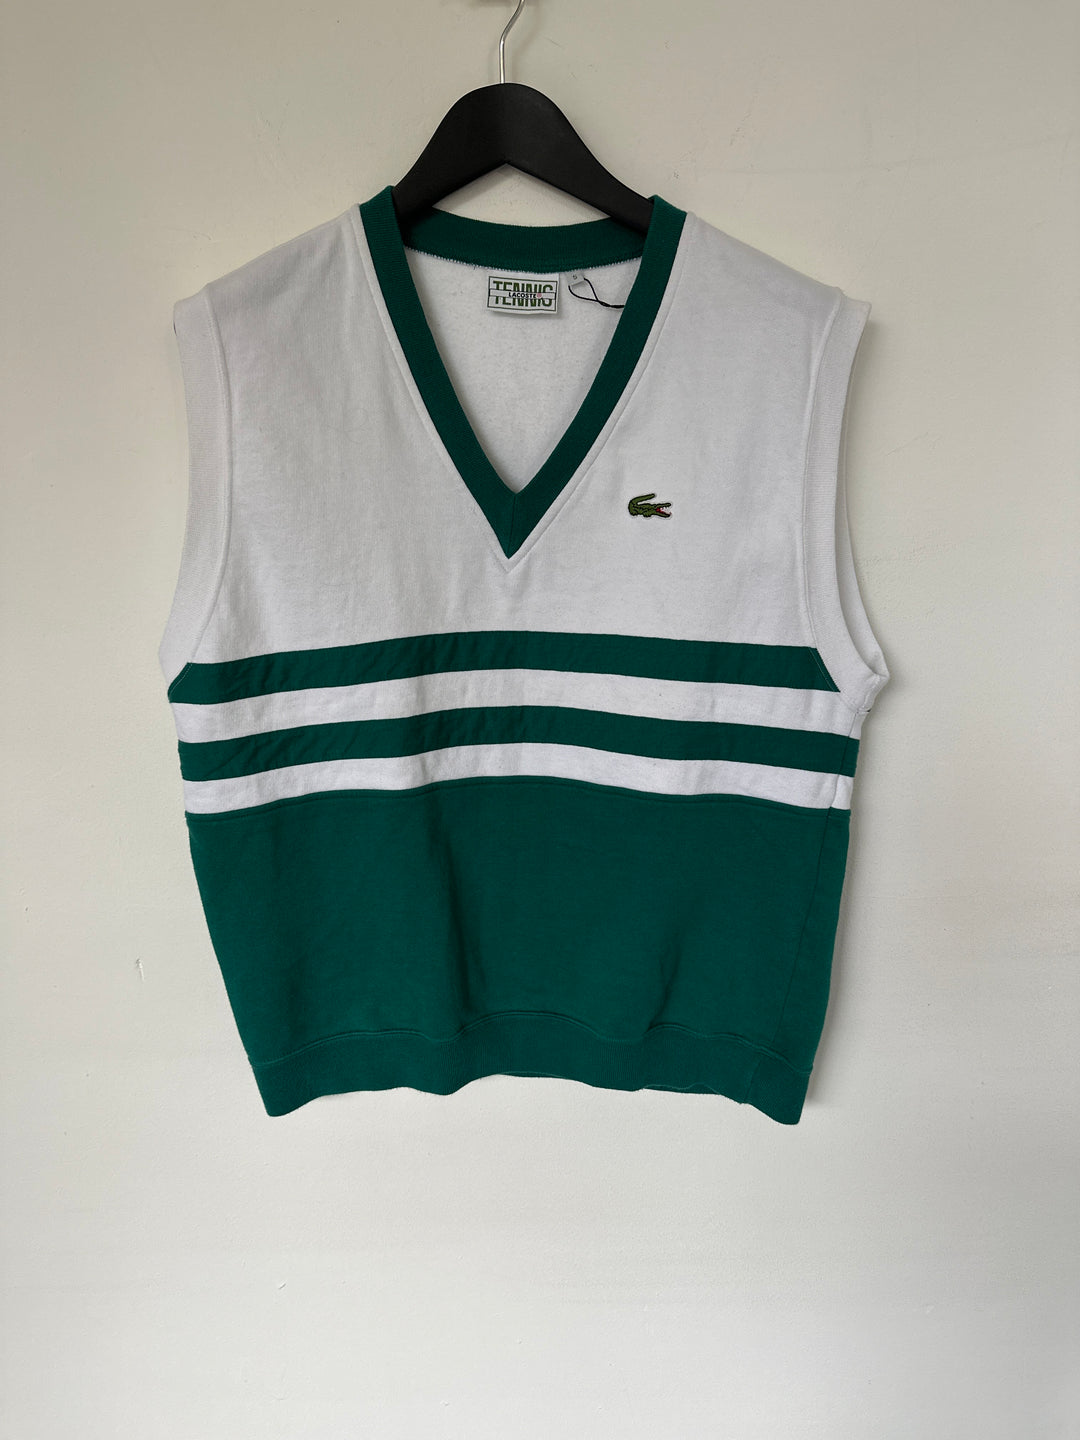 Lacoste jersey green white stripe tennis vest - XL